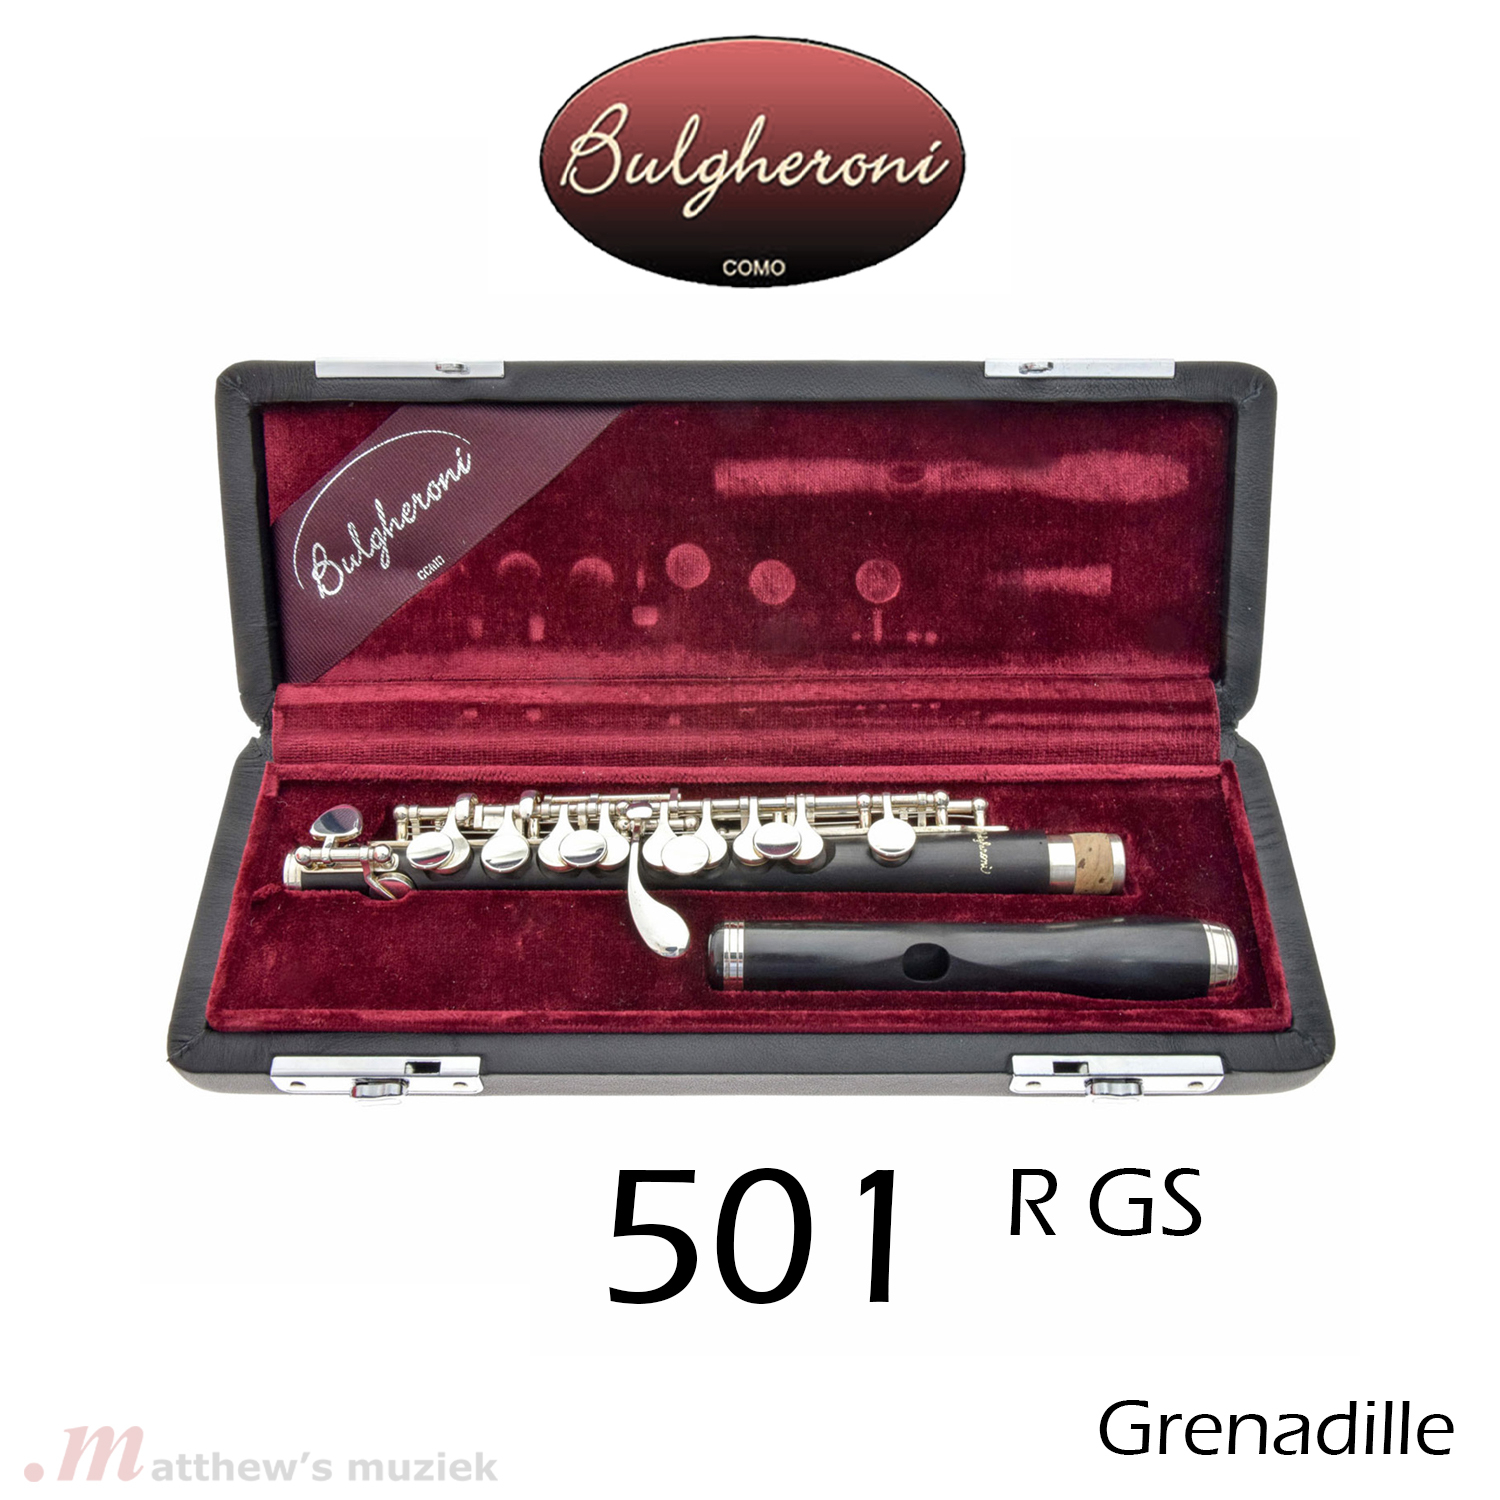 Bulgheroni Piccolo - 501 R GS Grenadille